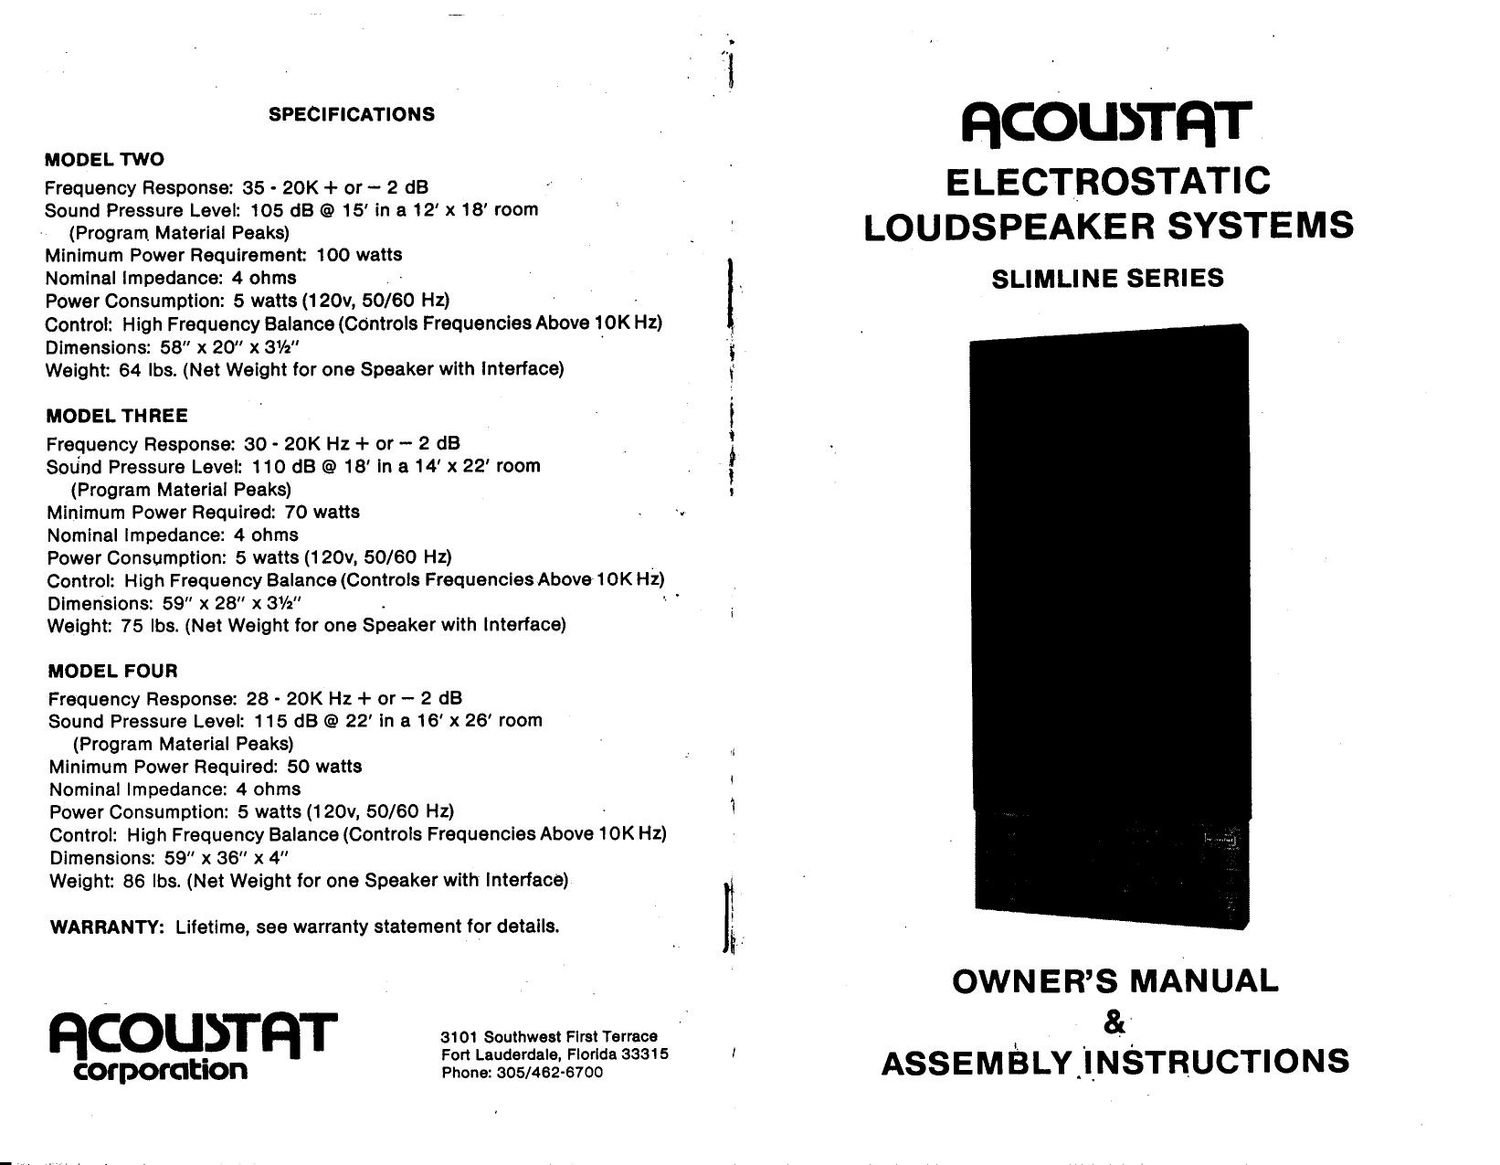 Acoustat Model 4 Owners Manual